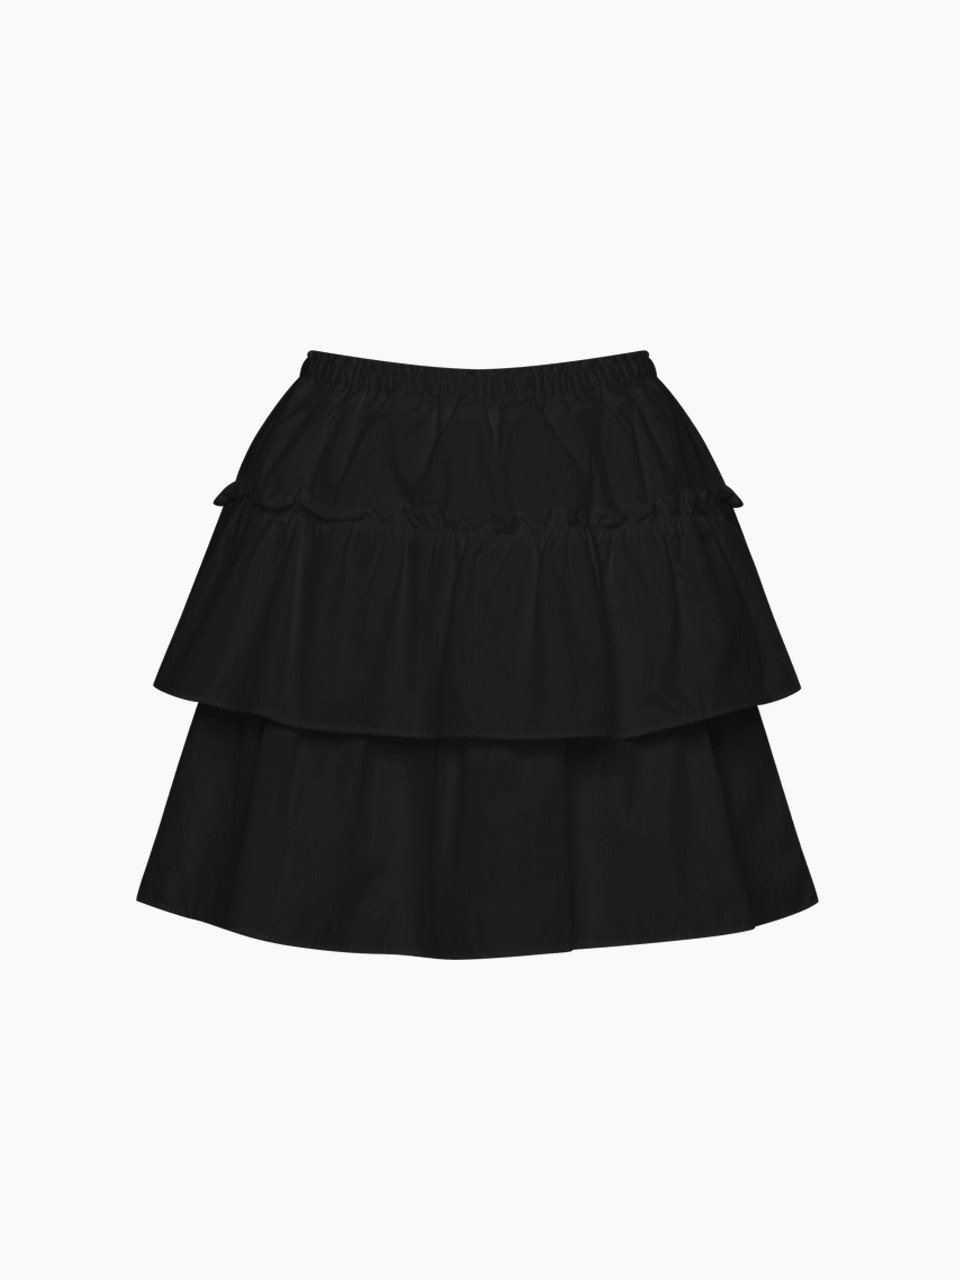 french cancan skirt - black